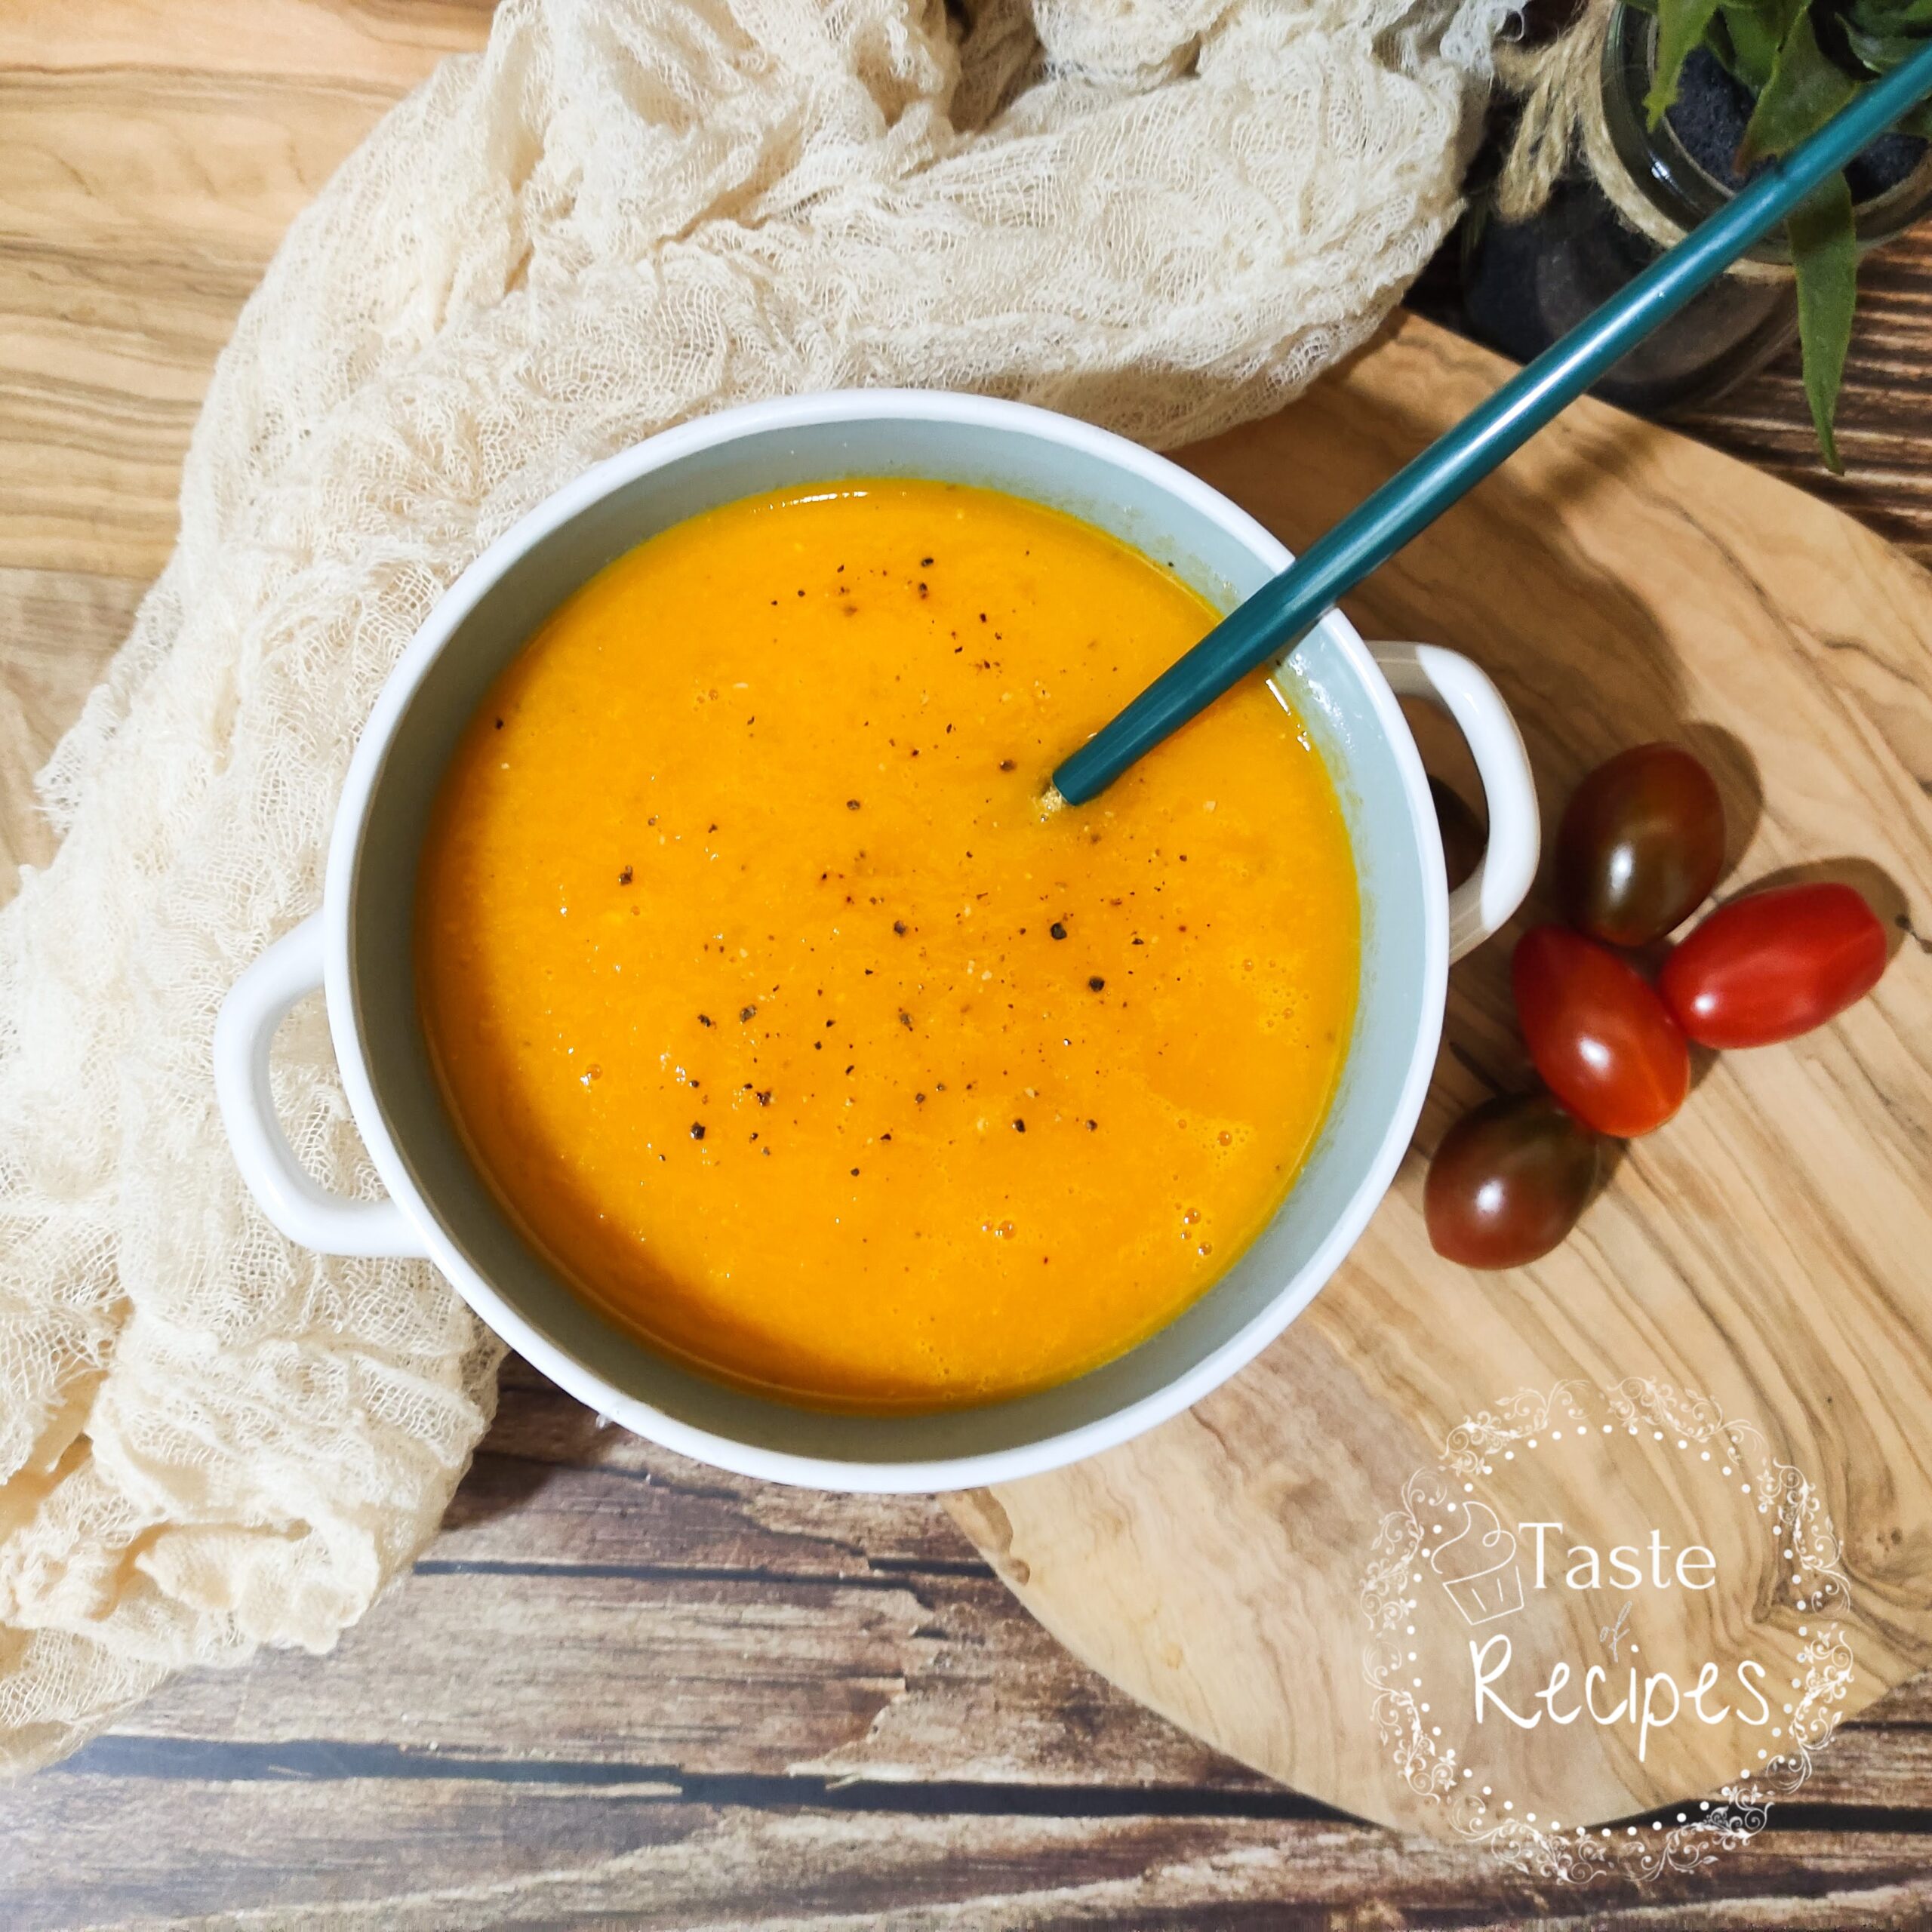 Tomato soup recipe, a humble and traditional recipe.